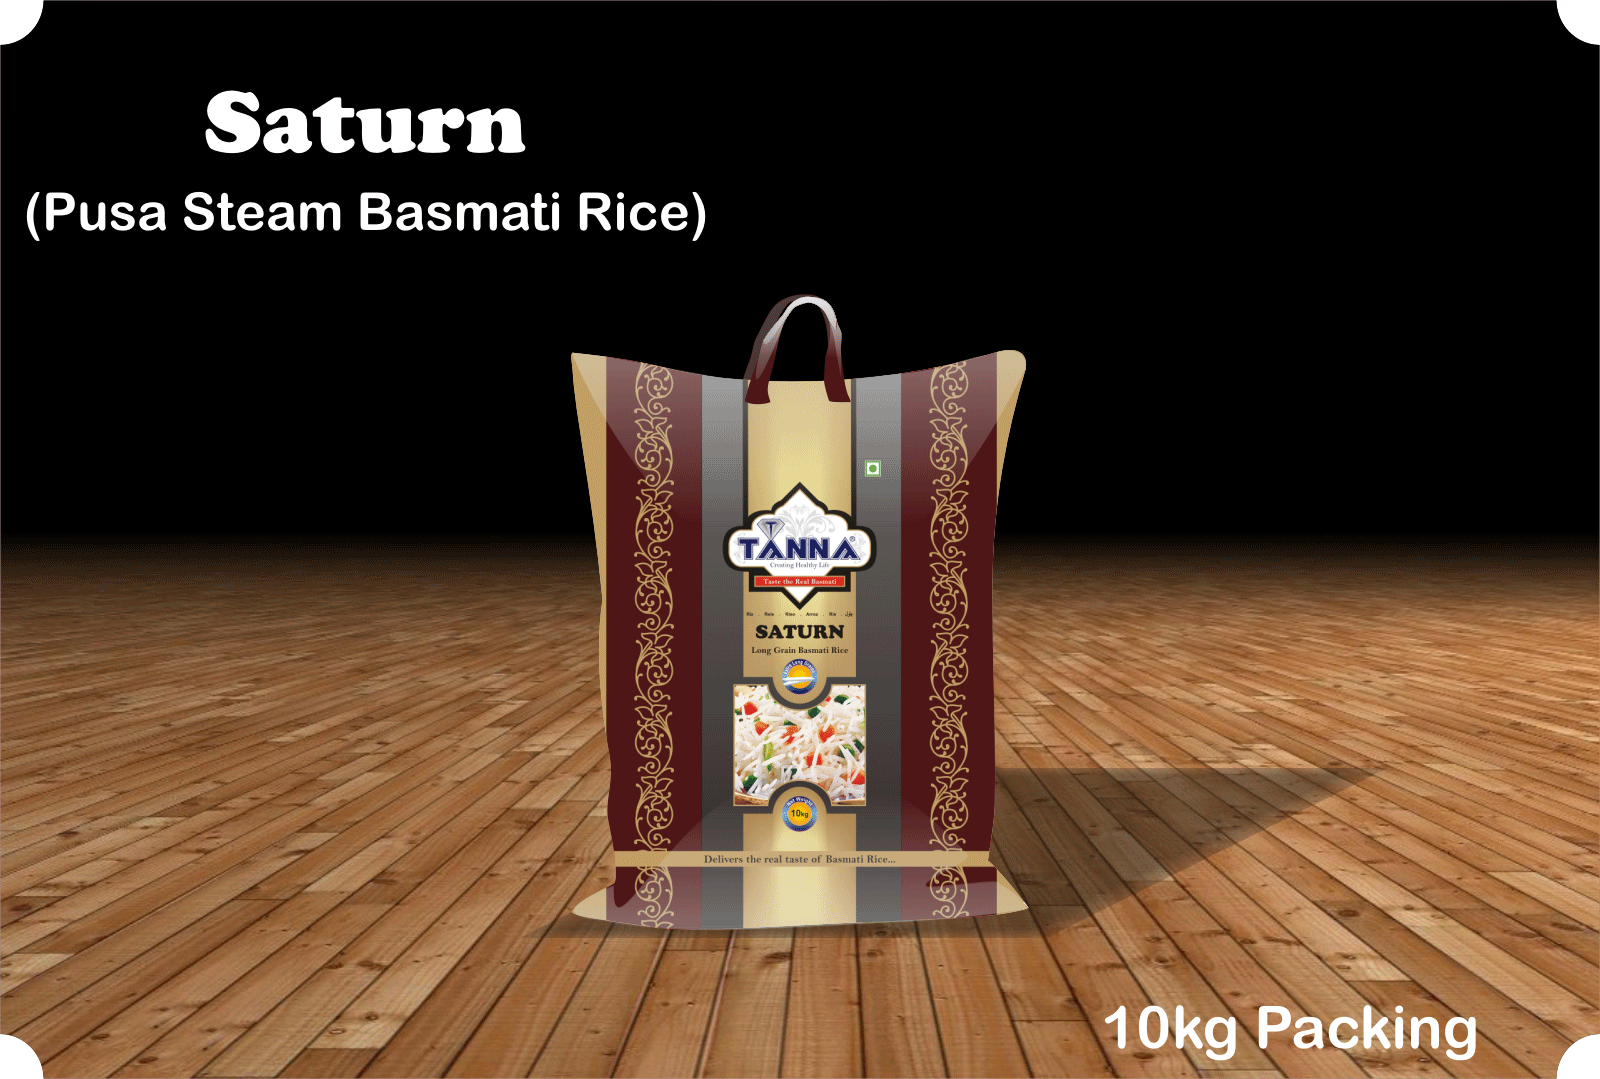 Tanna Saturn Steam Basmati Rice